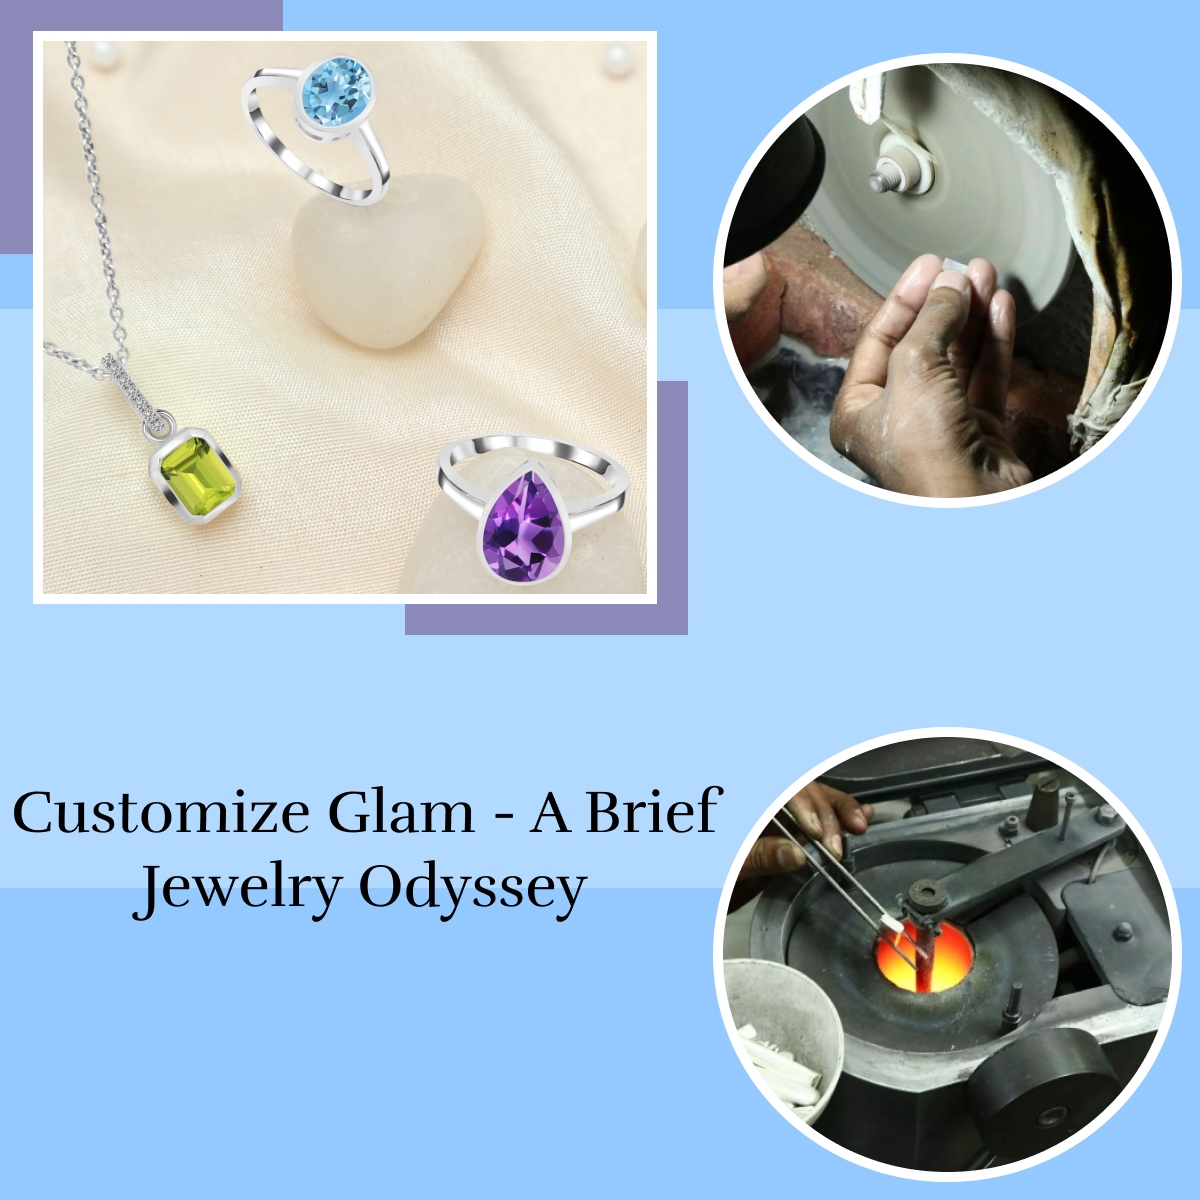 Statement Jewelry & How to Customize It